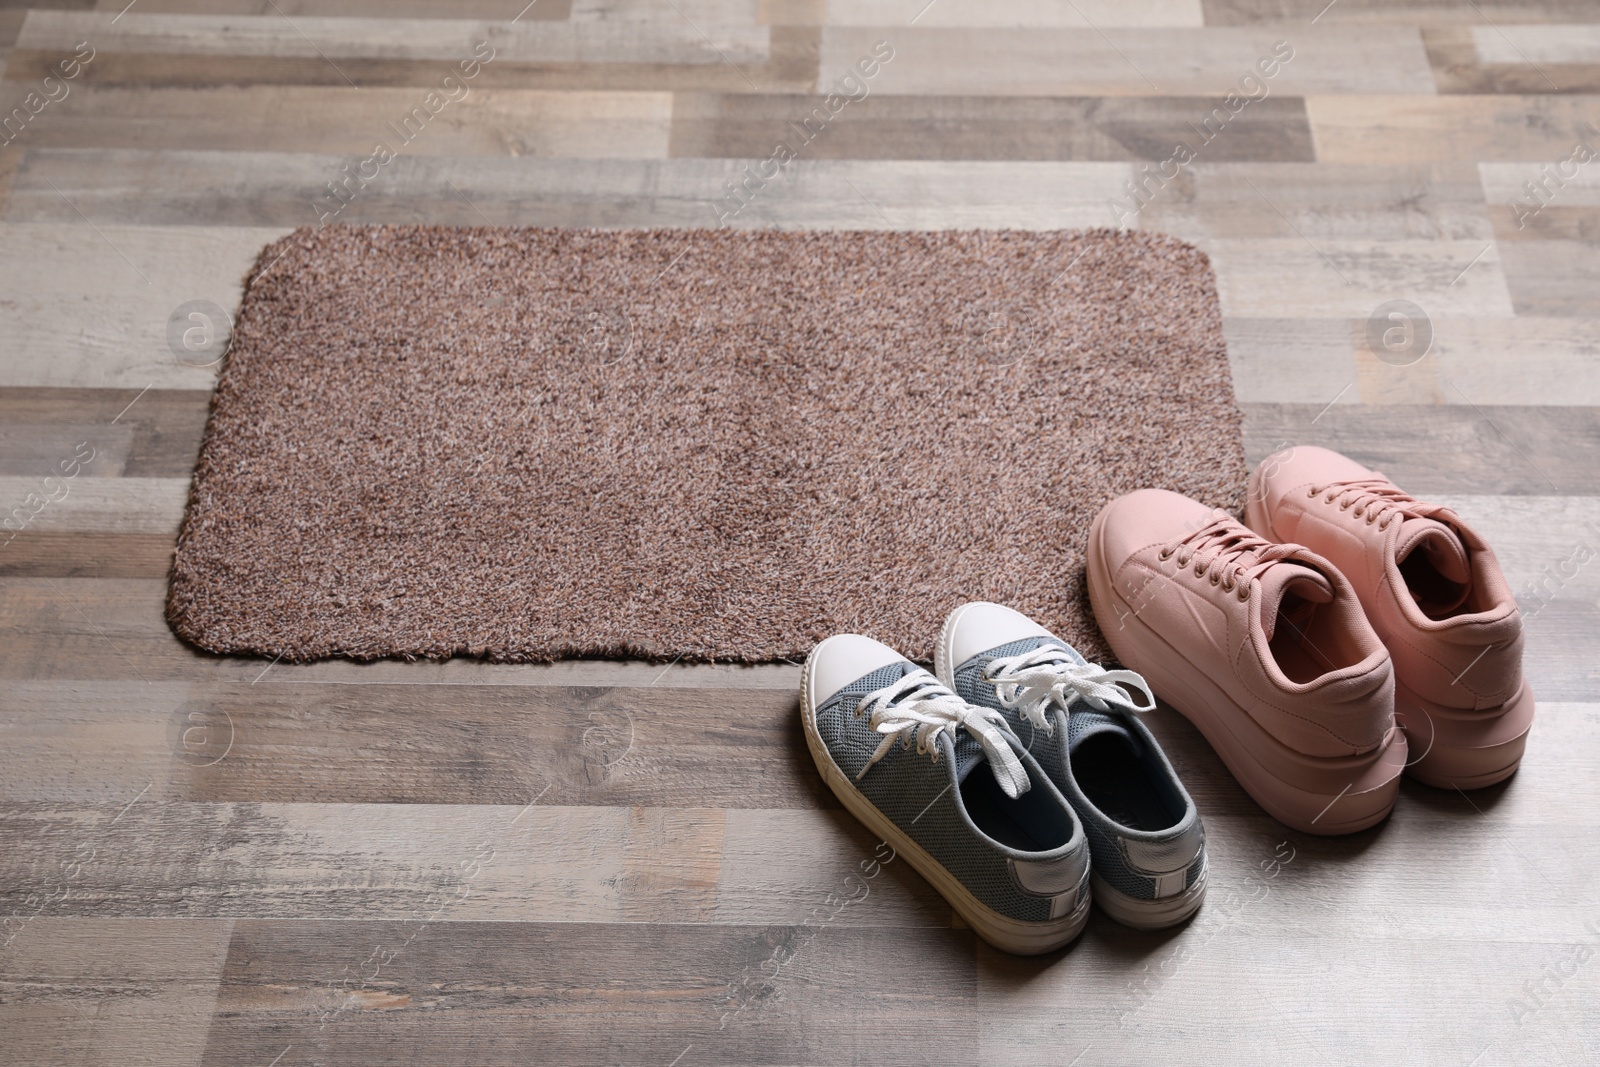 Photo of New clean door mat and shoes on floor